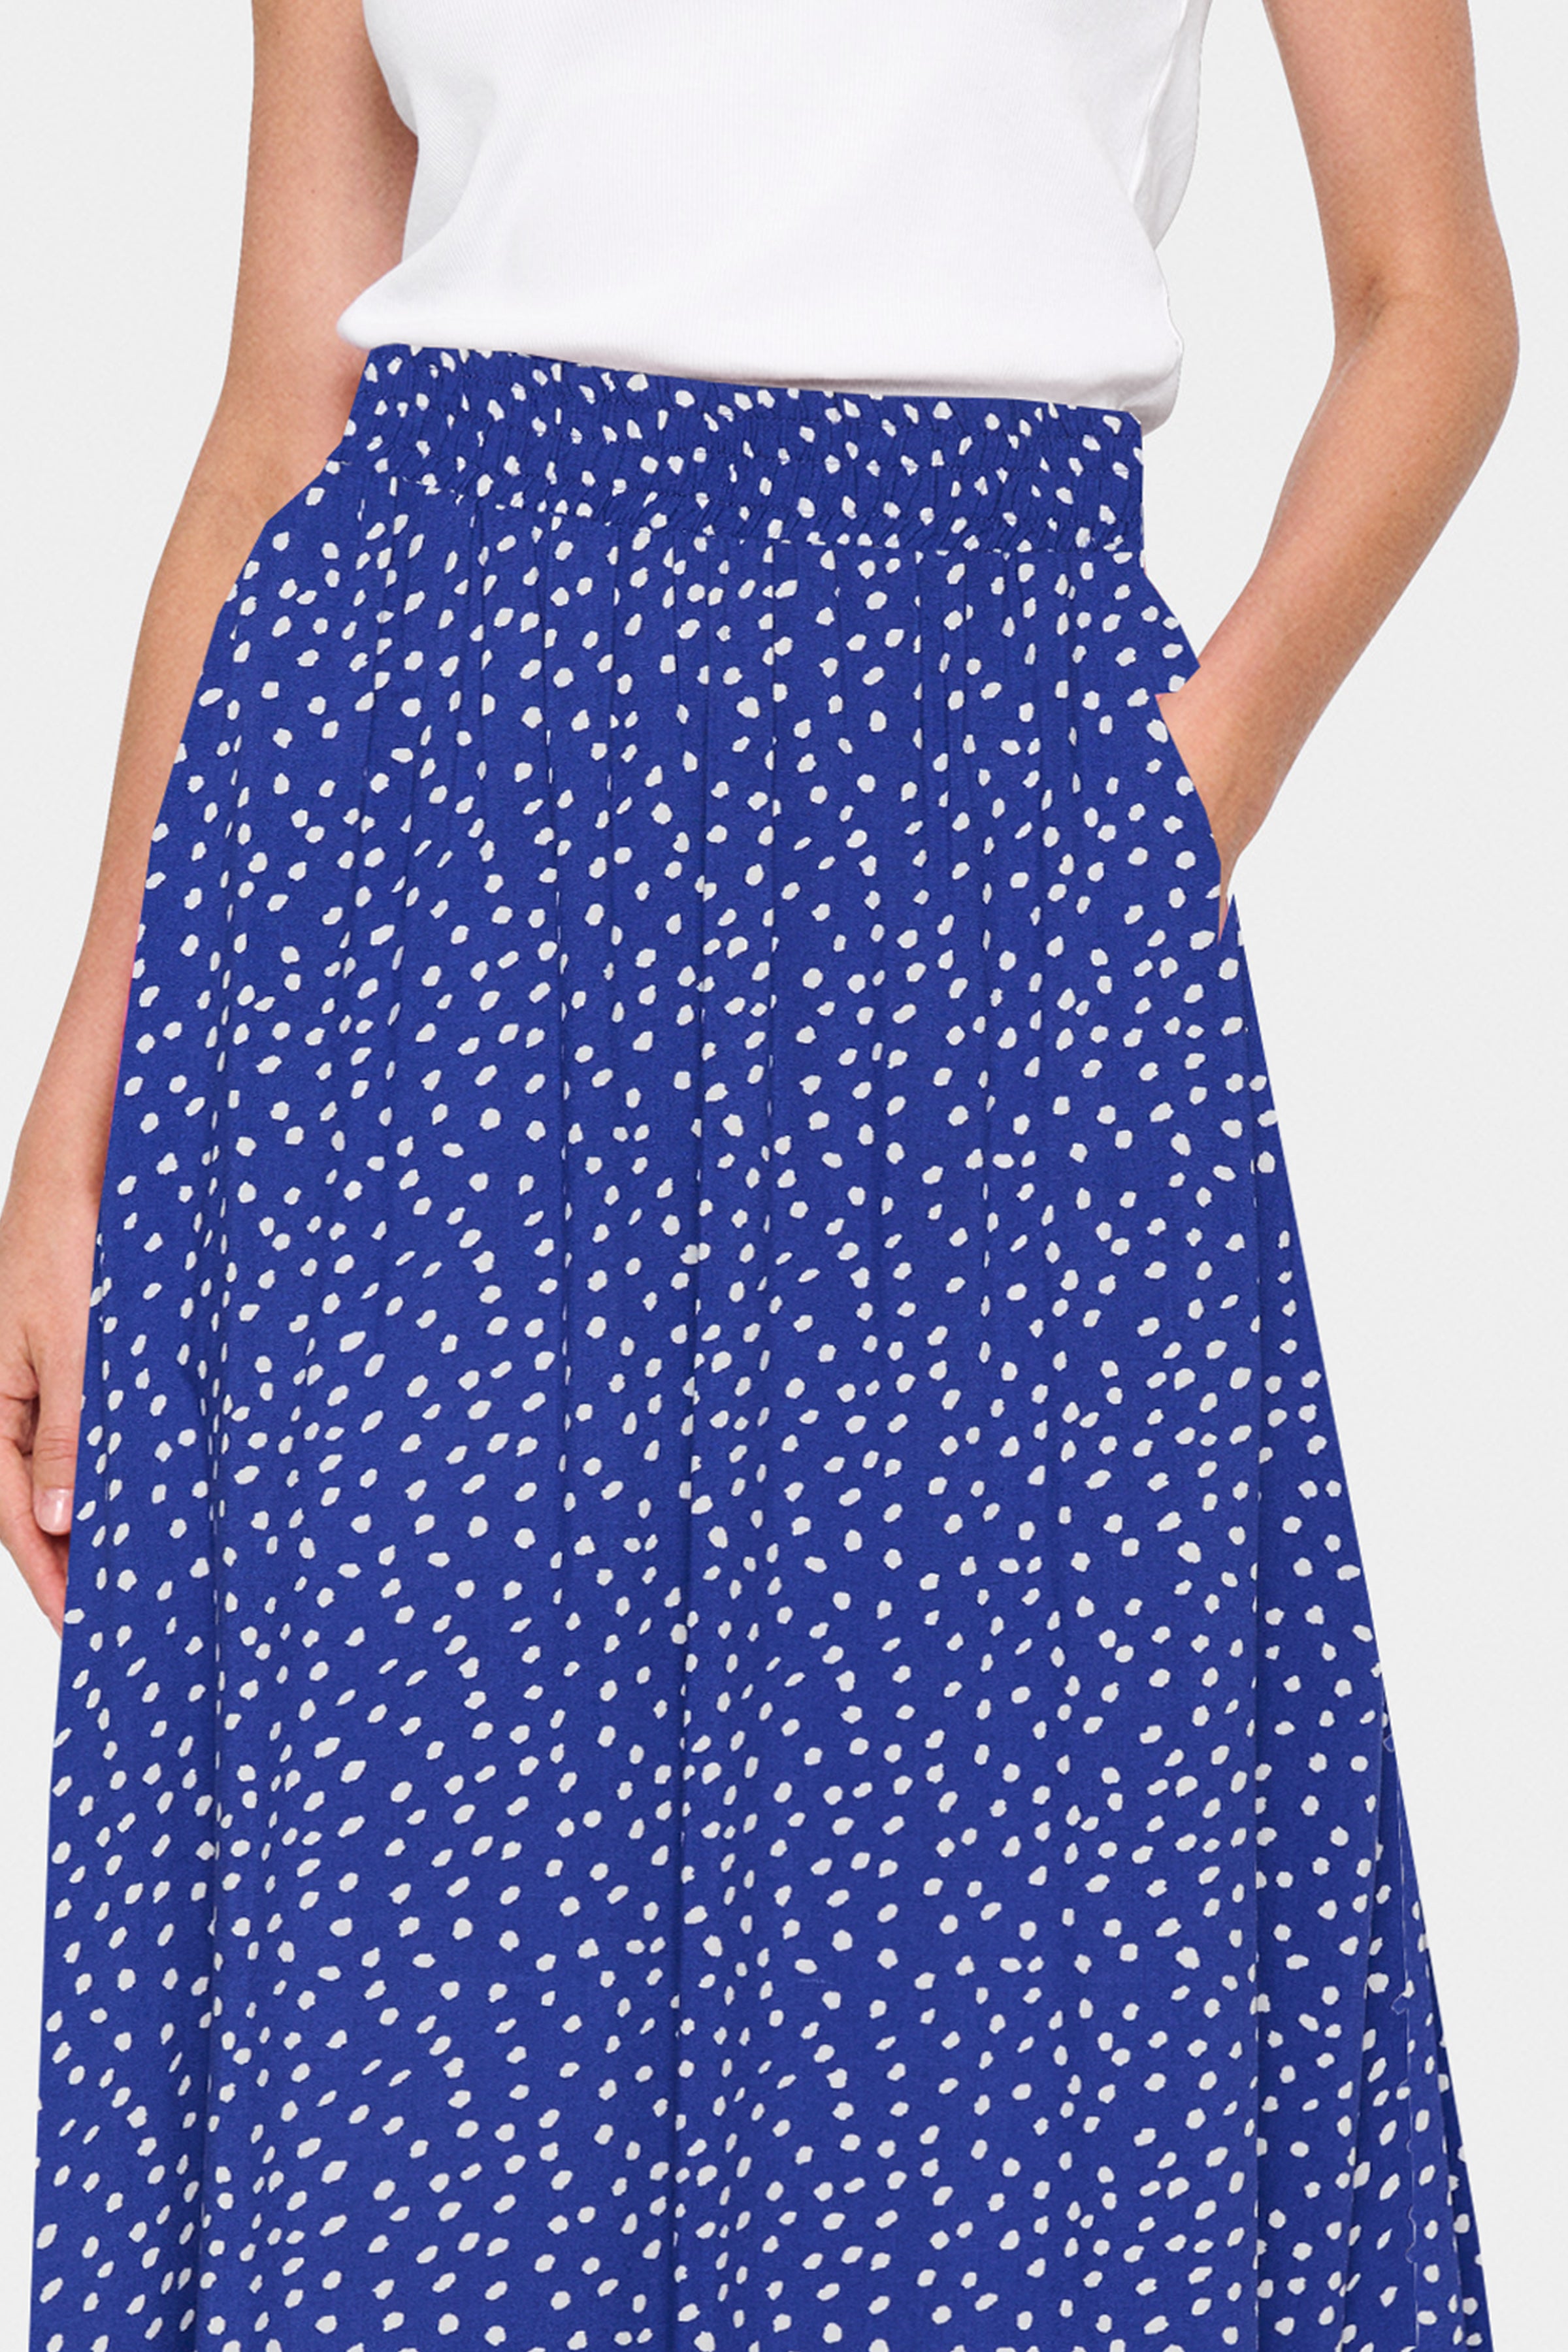 Saint Tropez Fatilde Skirt in Clematis Dots